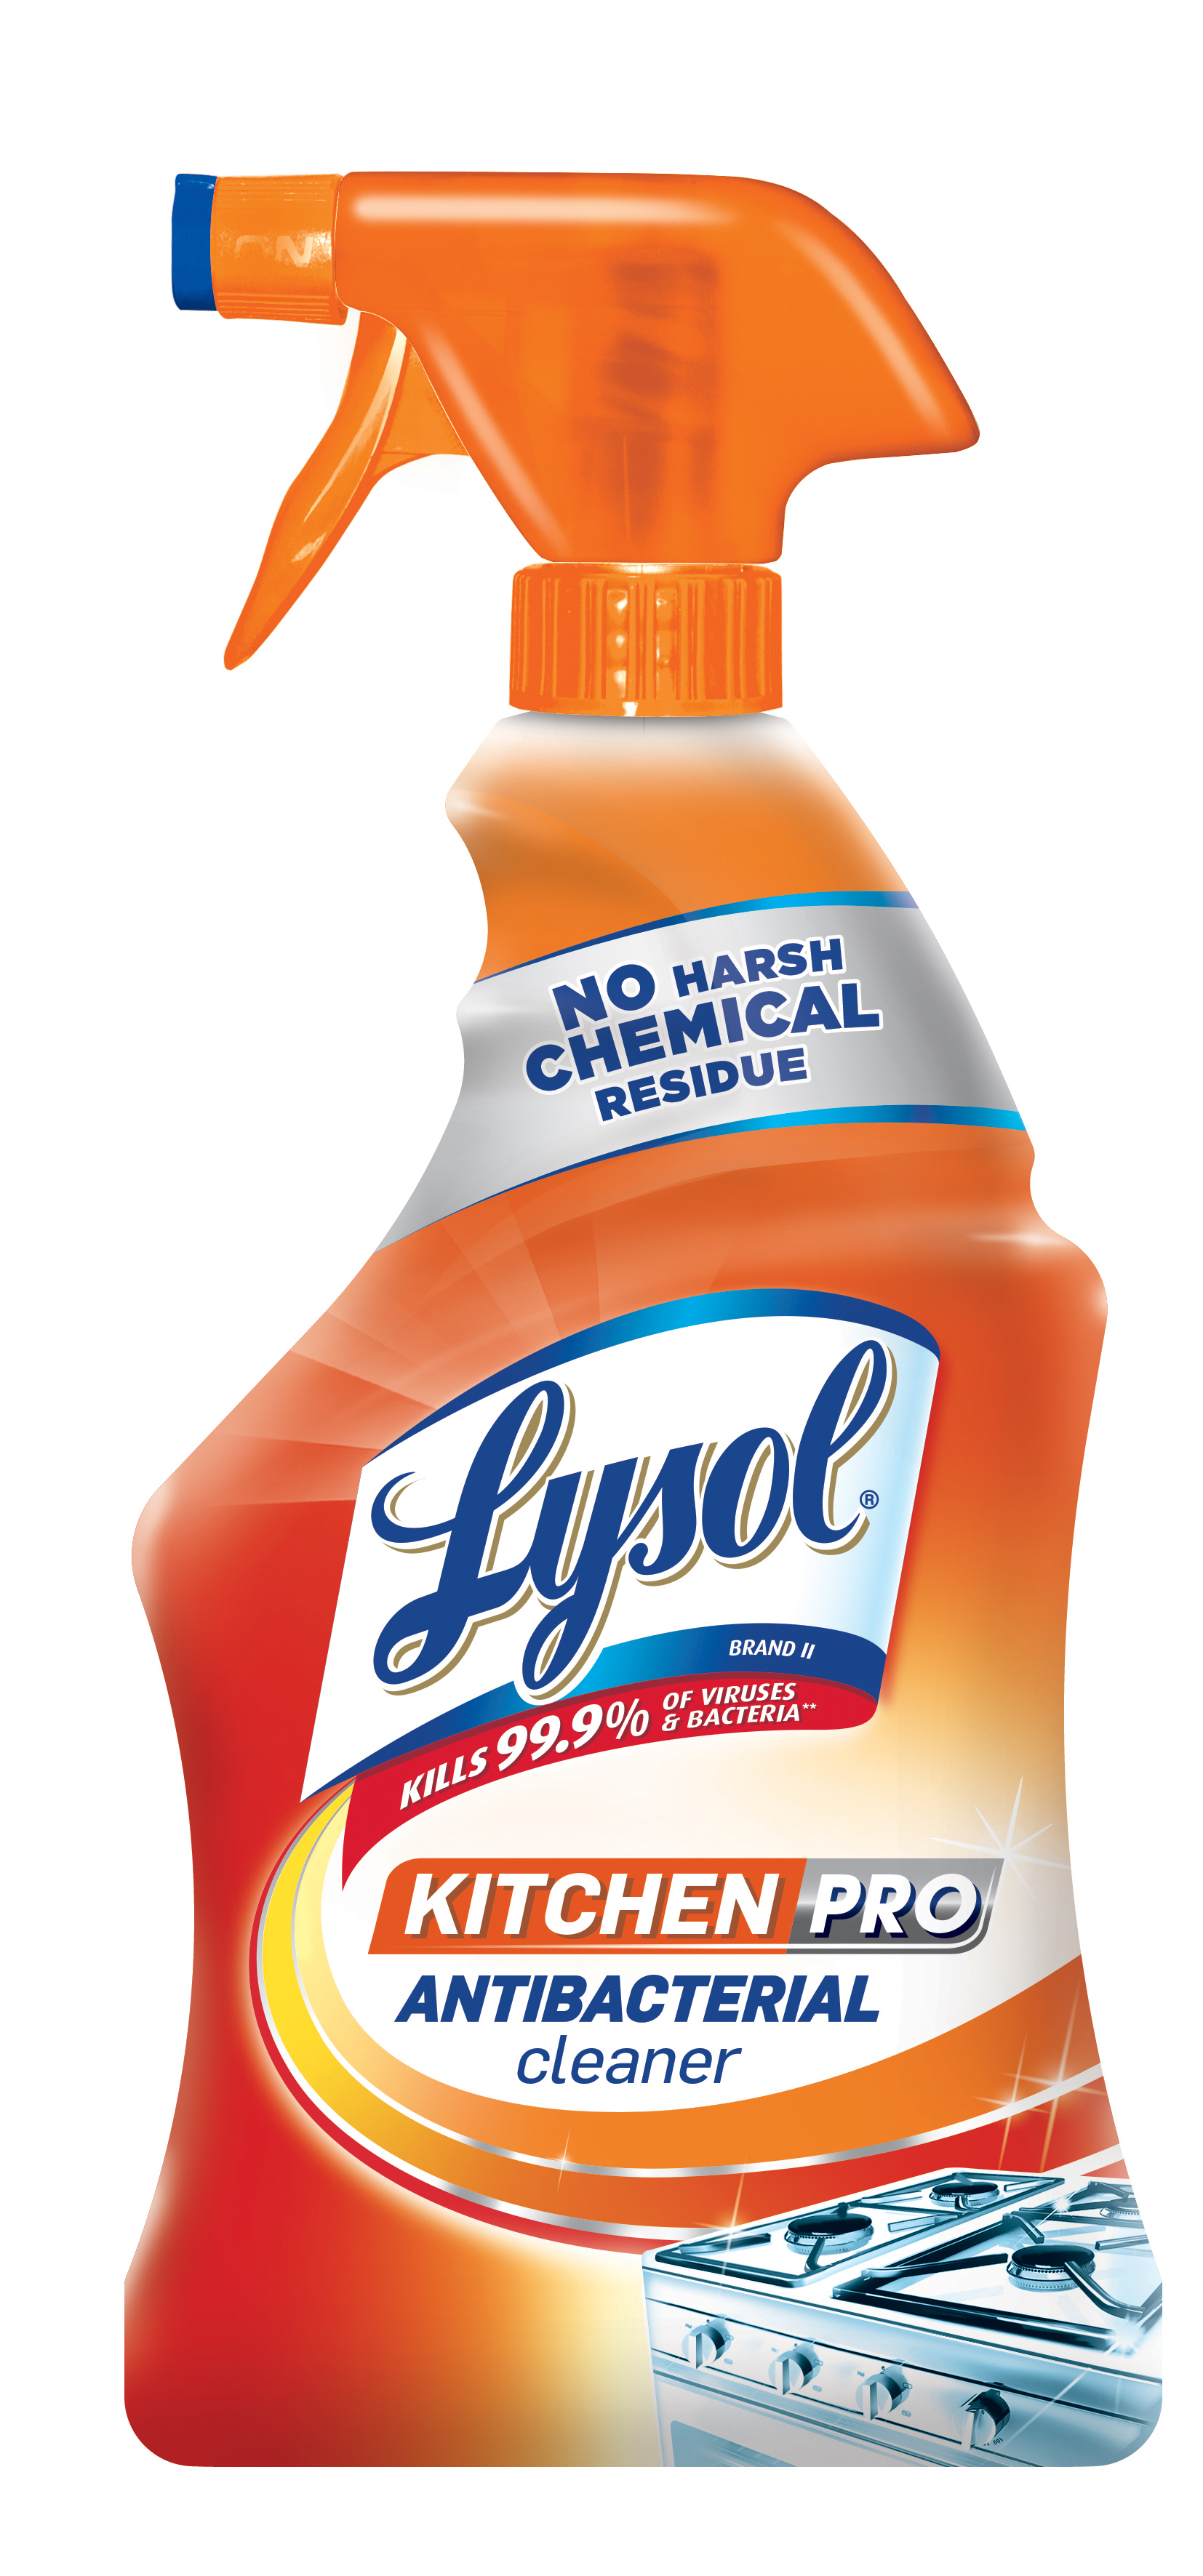 LYSOL® Kitchen Pro Antibacterial Cleaner
